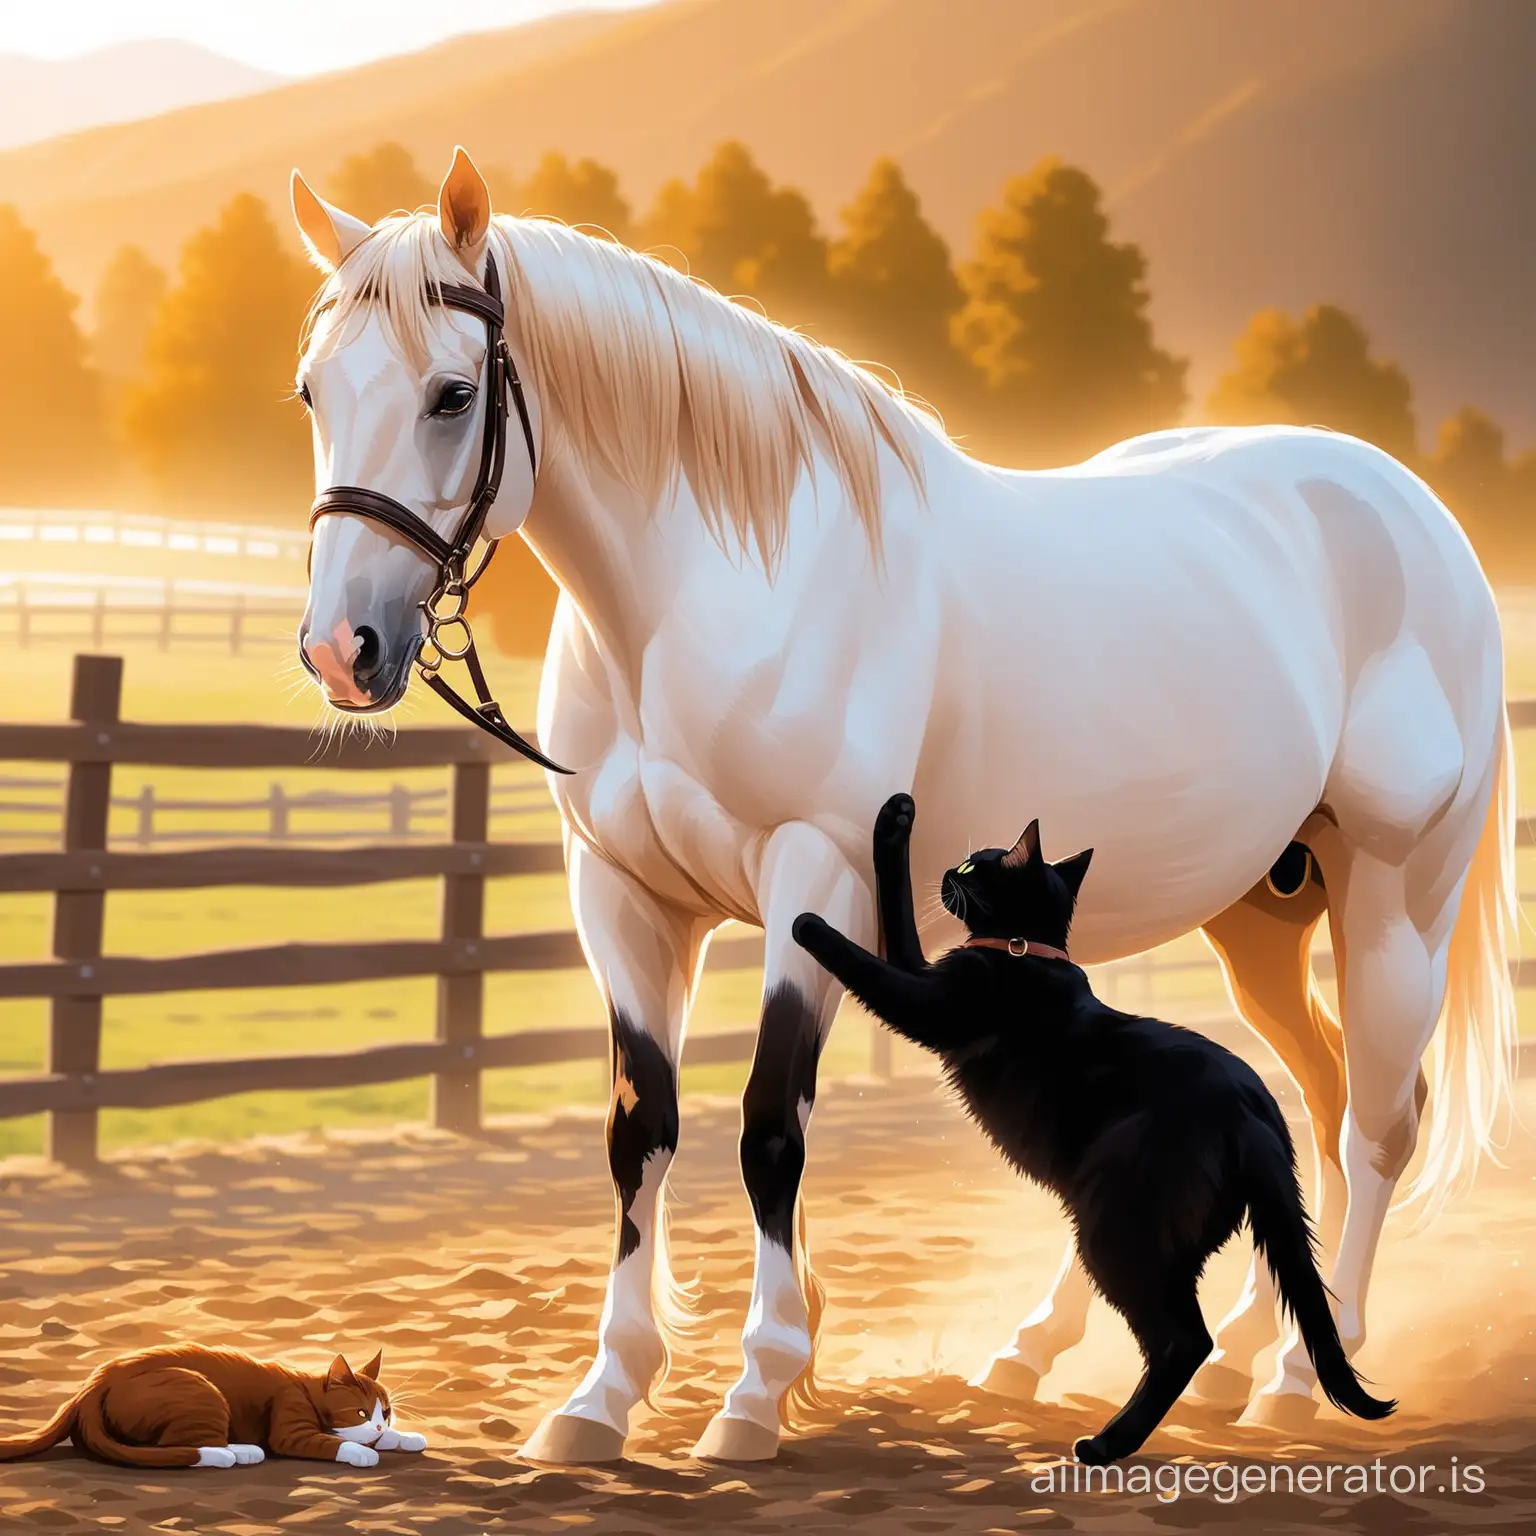 Cat-Riding-Horse-Playful-Feline-atop-Equestrian-Companion